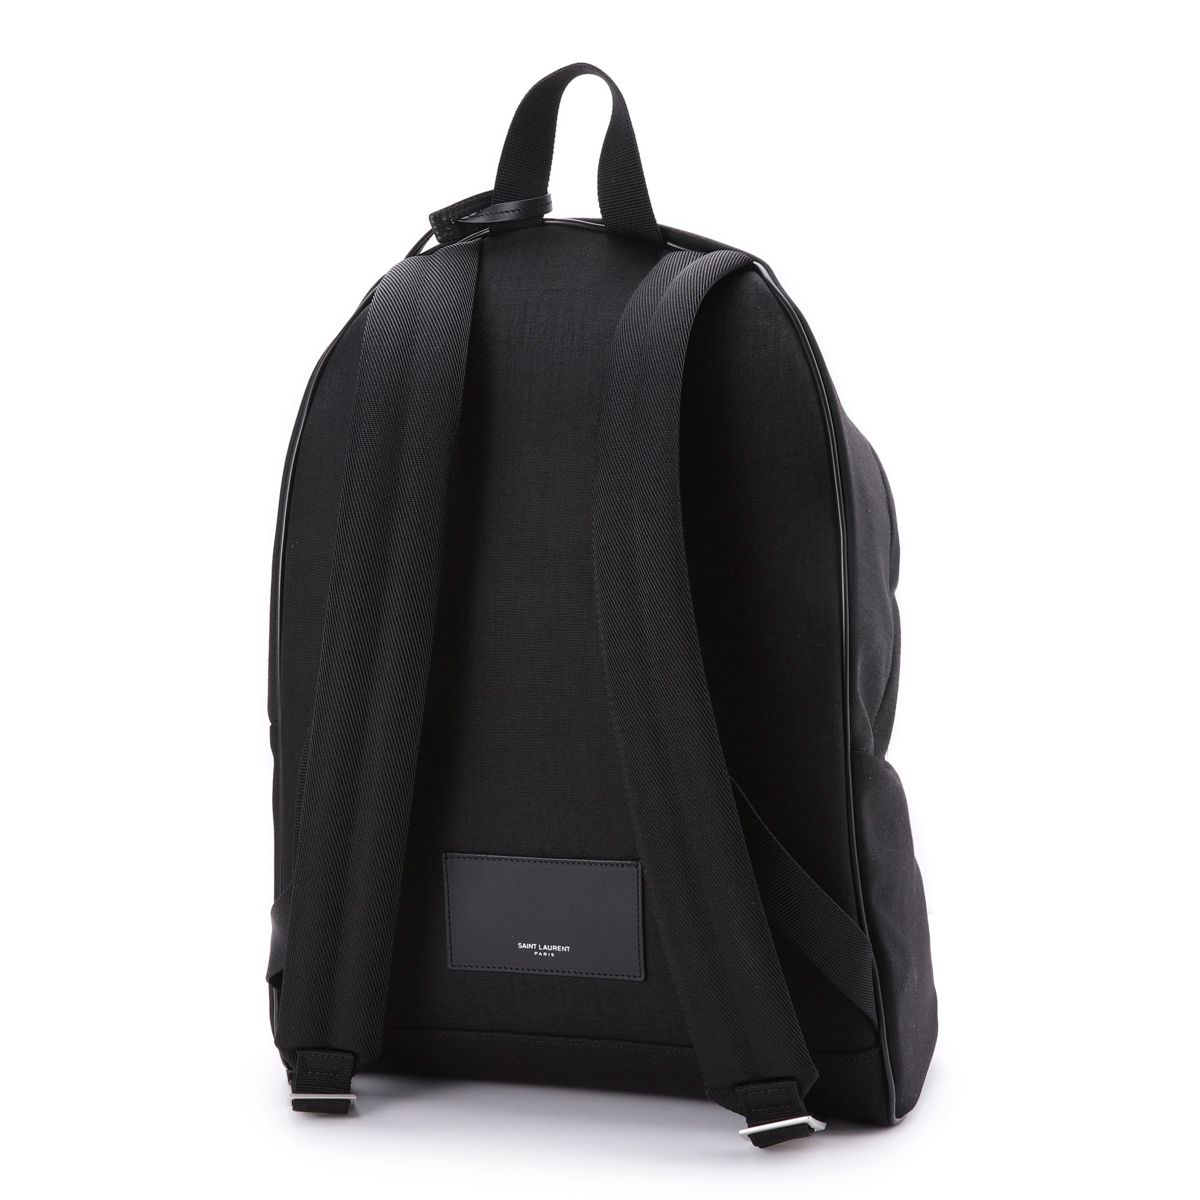 Yves Saint Laurent Yves Saint Laurent Backpack Rucksack Black Size ONE SIZE - 2 Preview